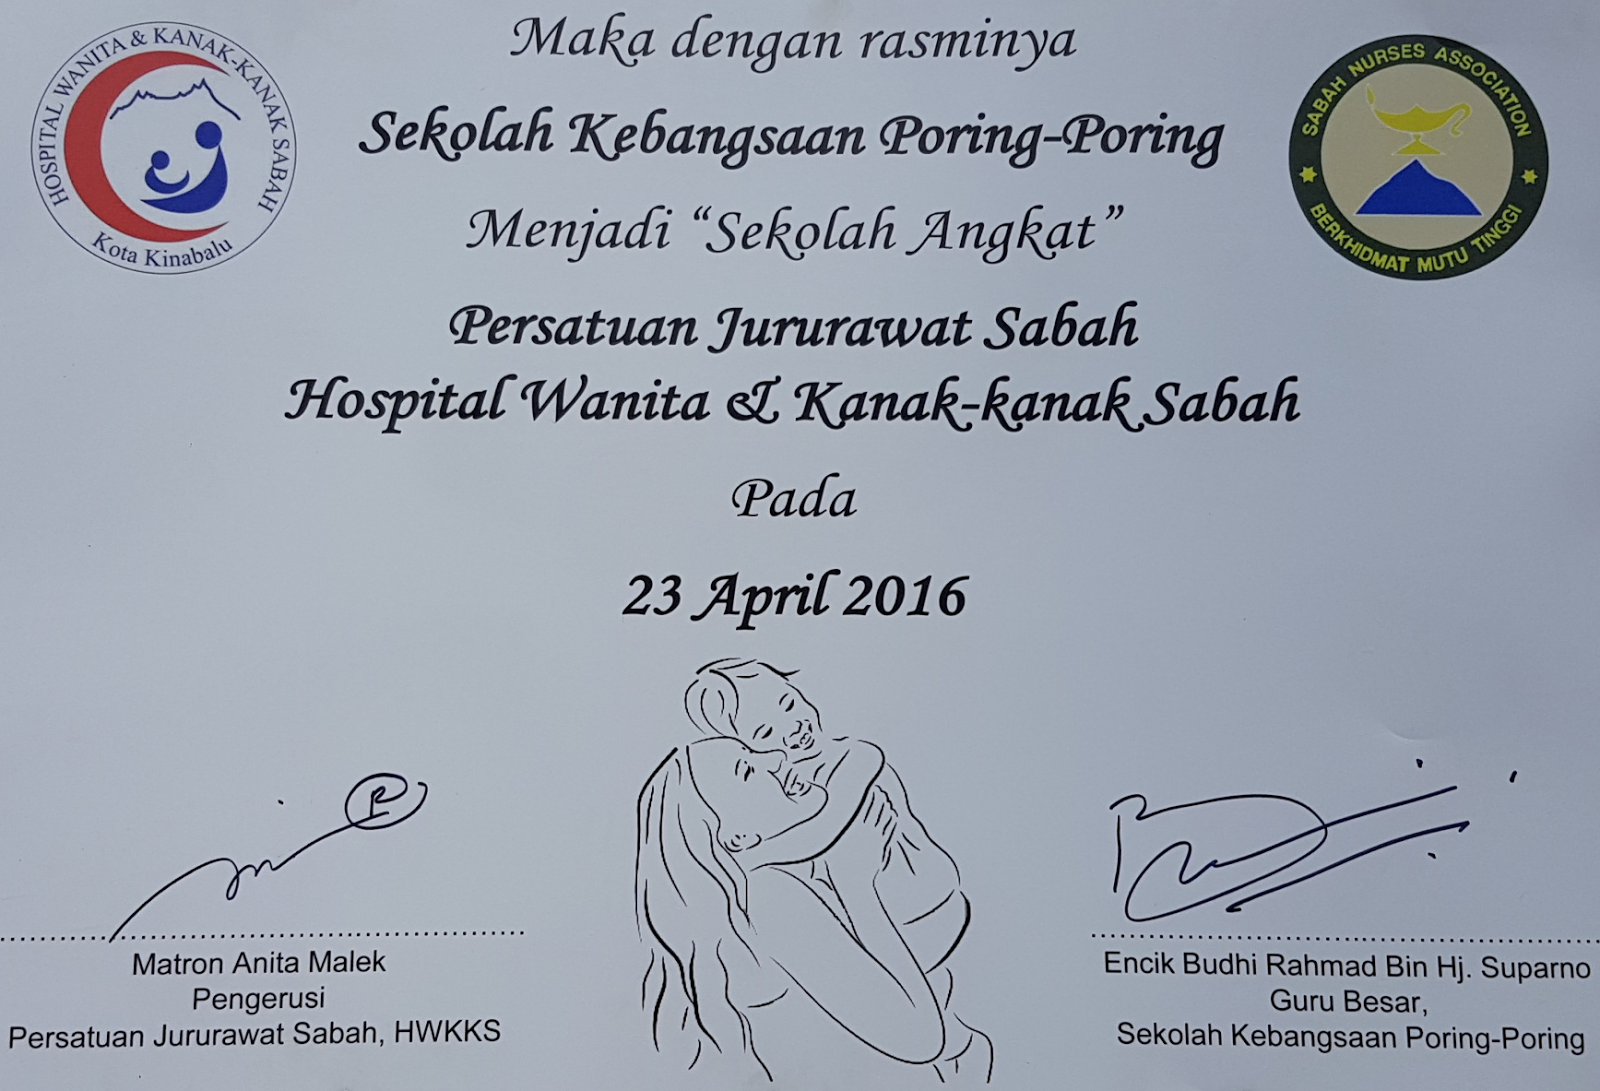 Persatuan Jururawat Sabah, Hospital Wanita dan Kanak-Kanak Sabah